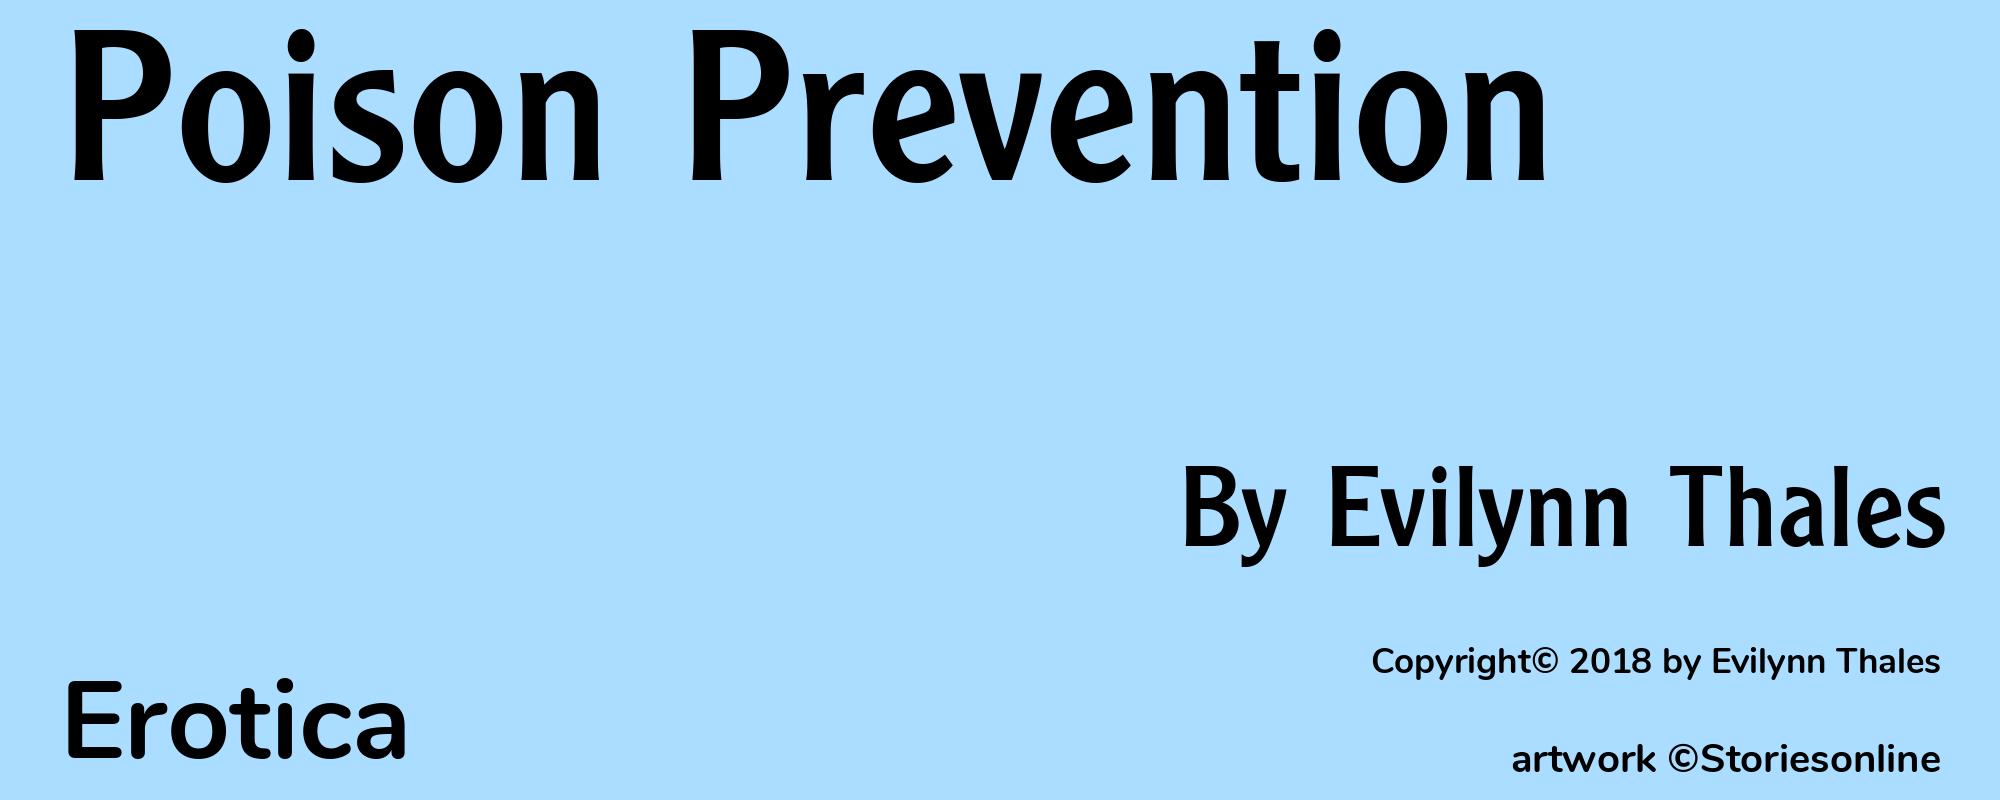 Poison Prevention - Cover